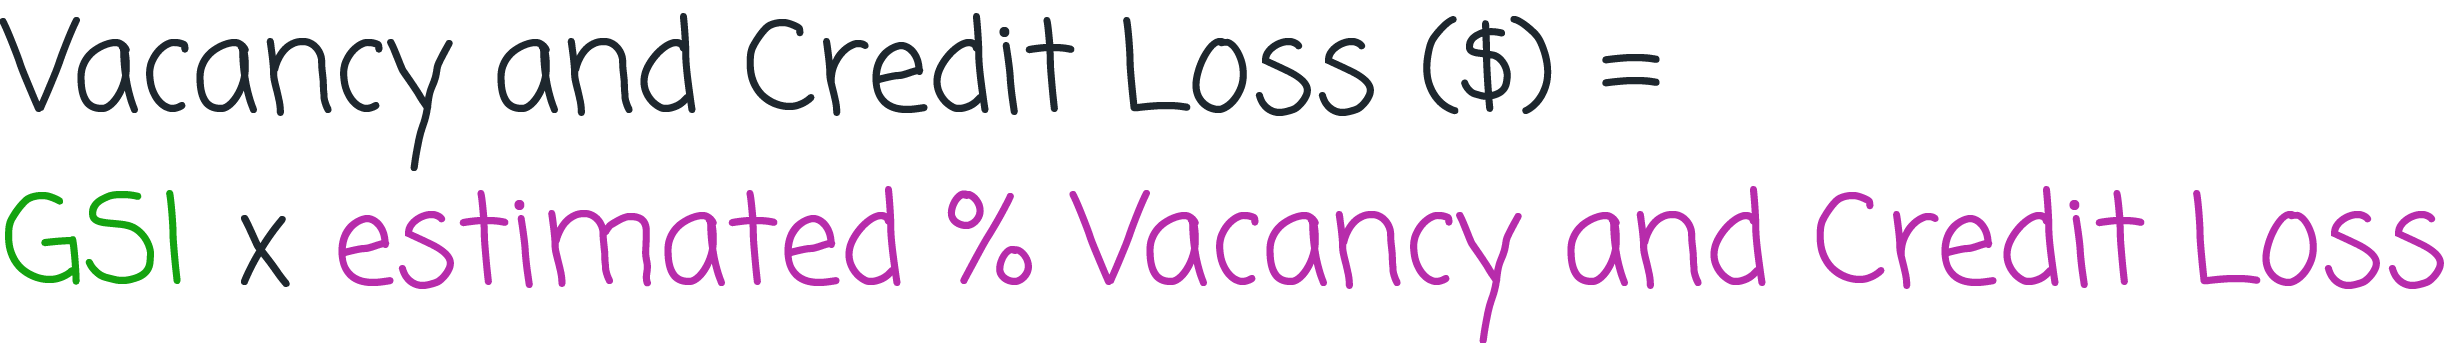 Vacancy and Credit Loss calculation